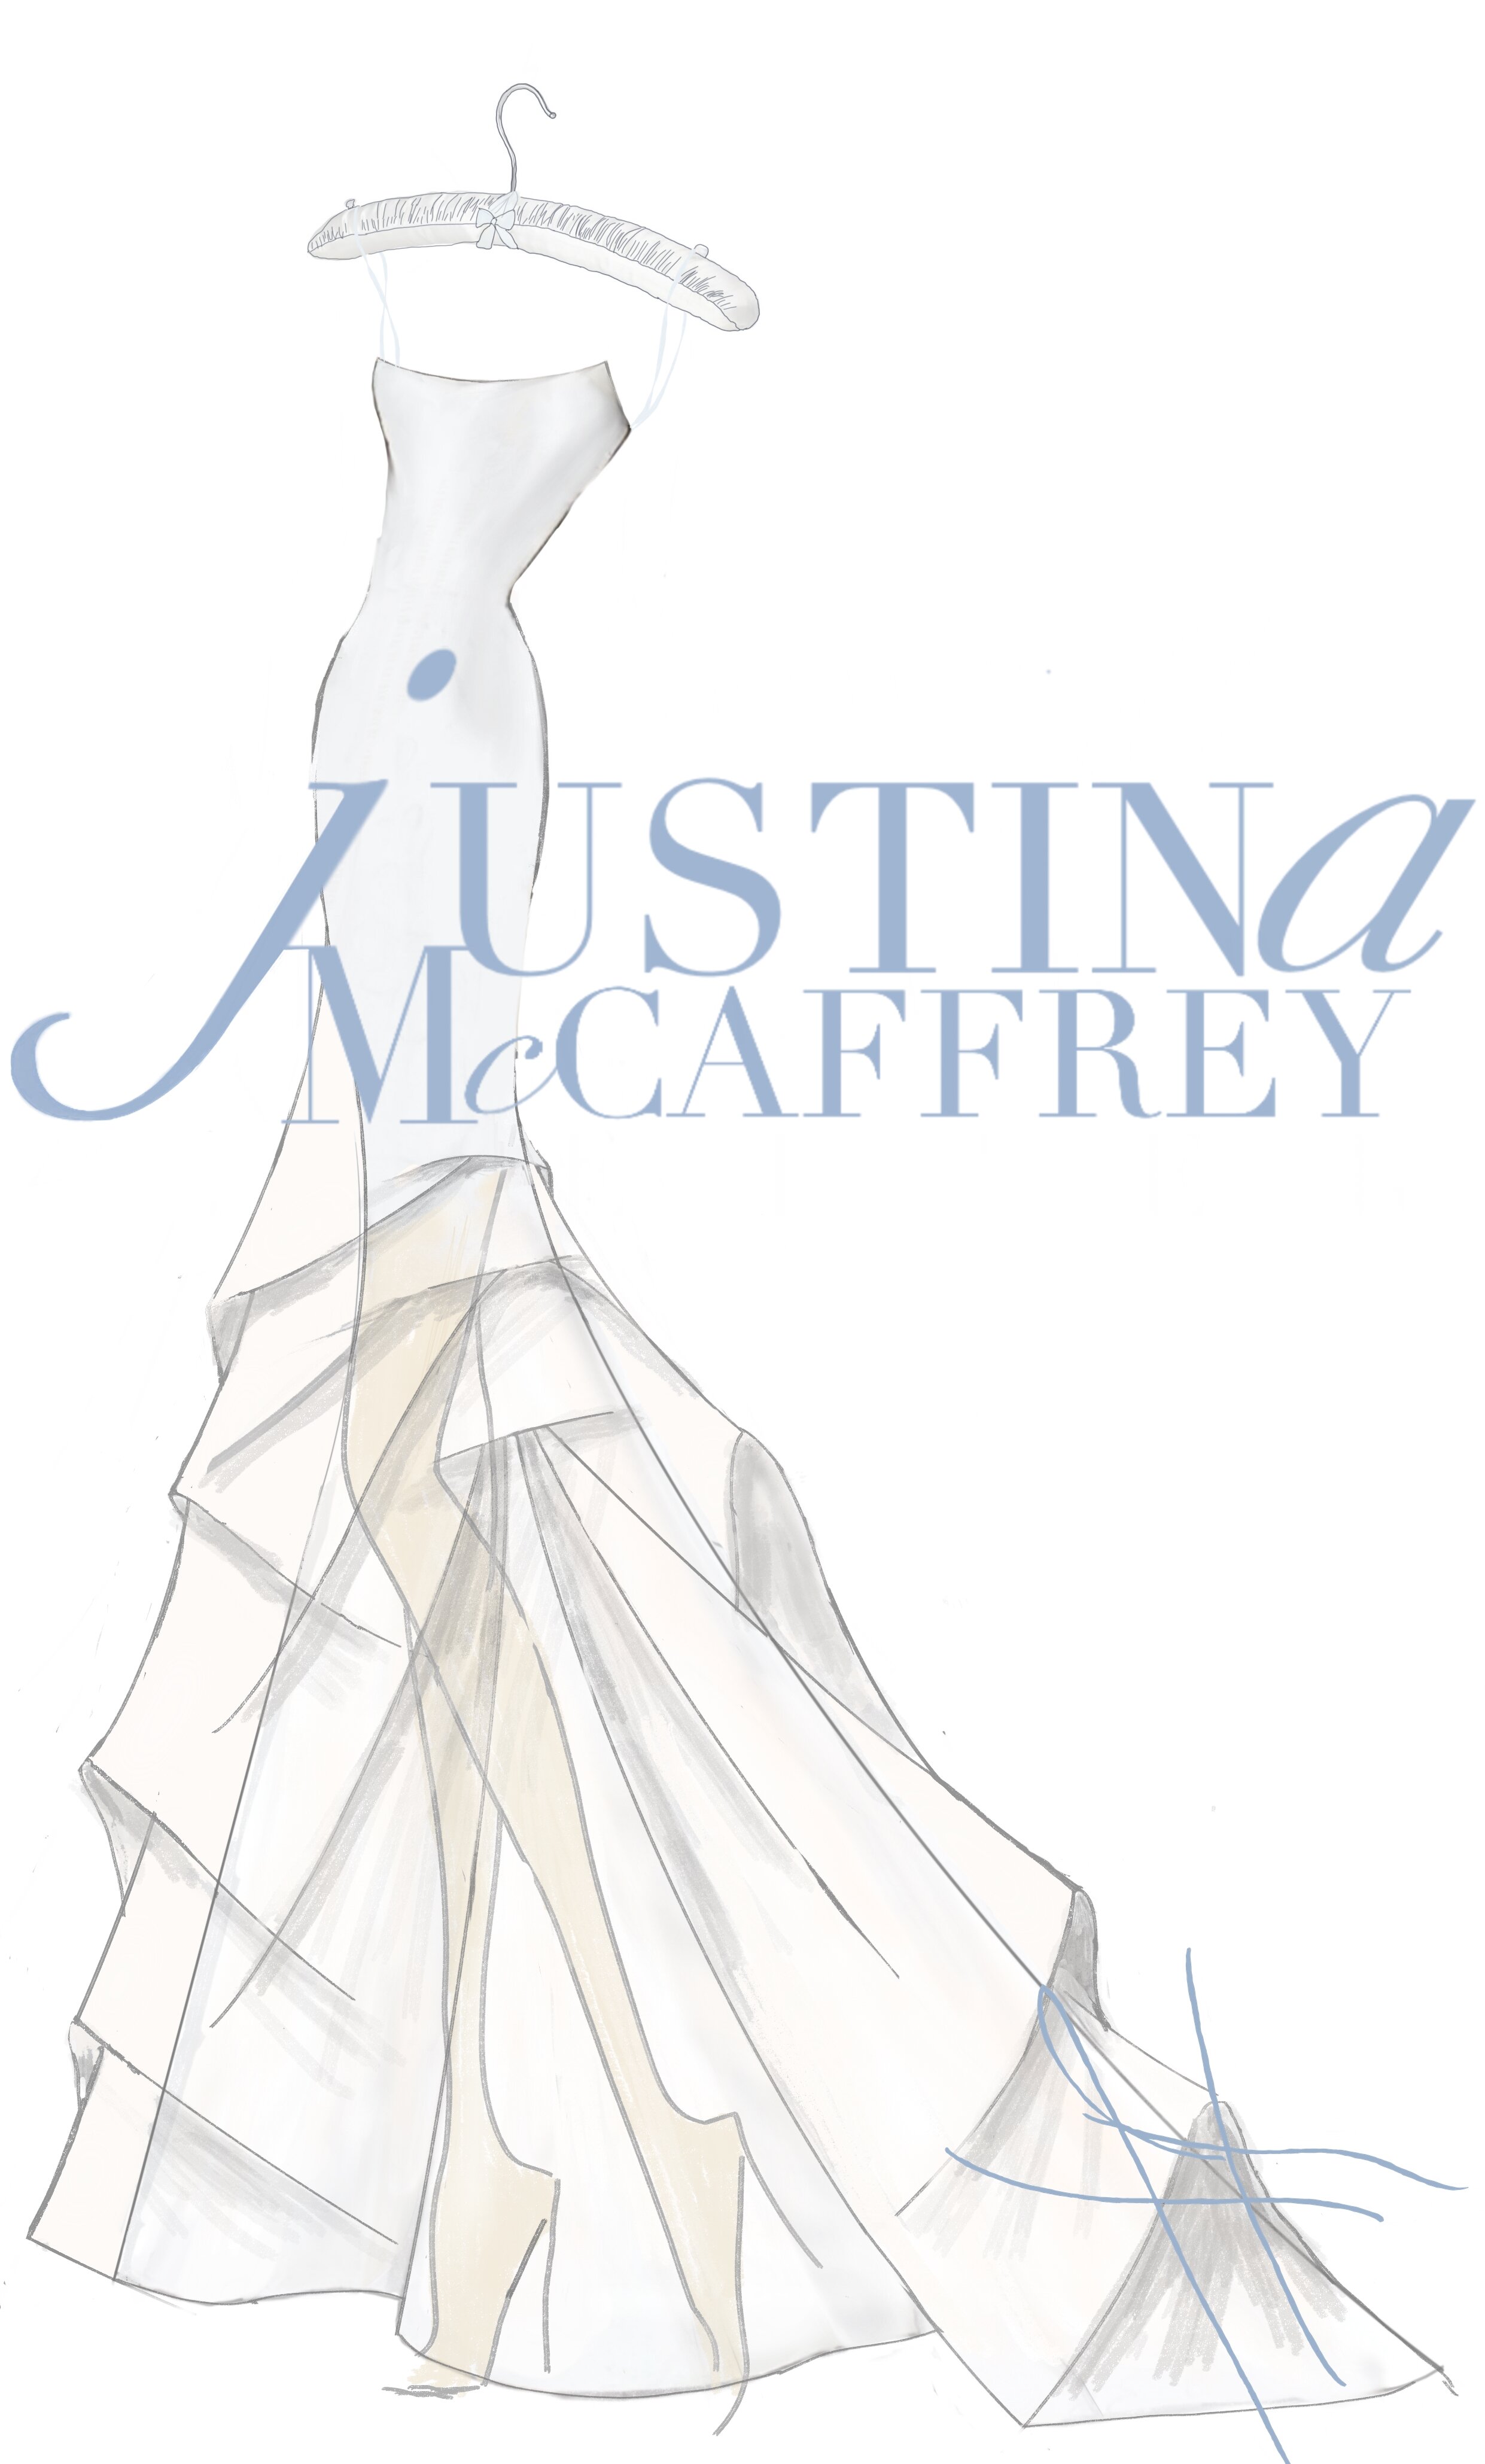 JUSTINA MCCAFFREY